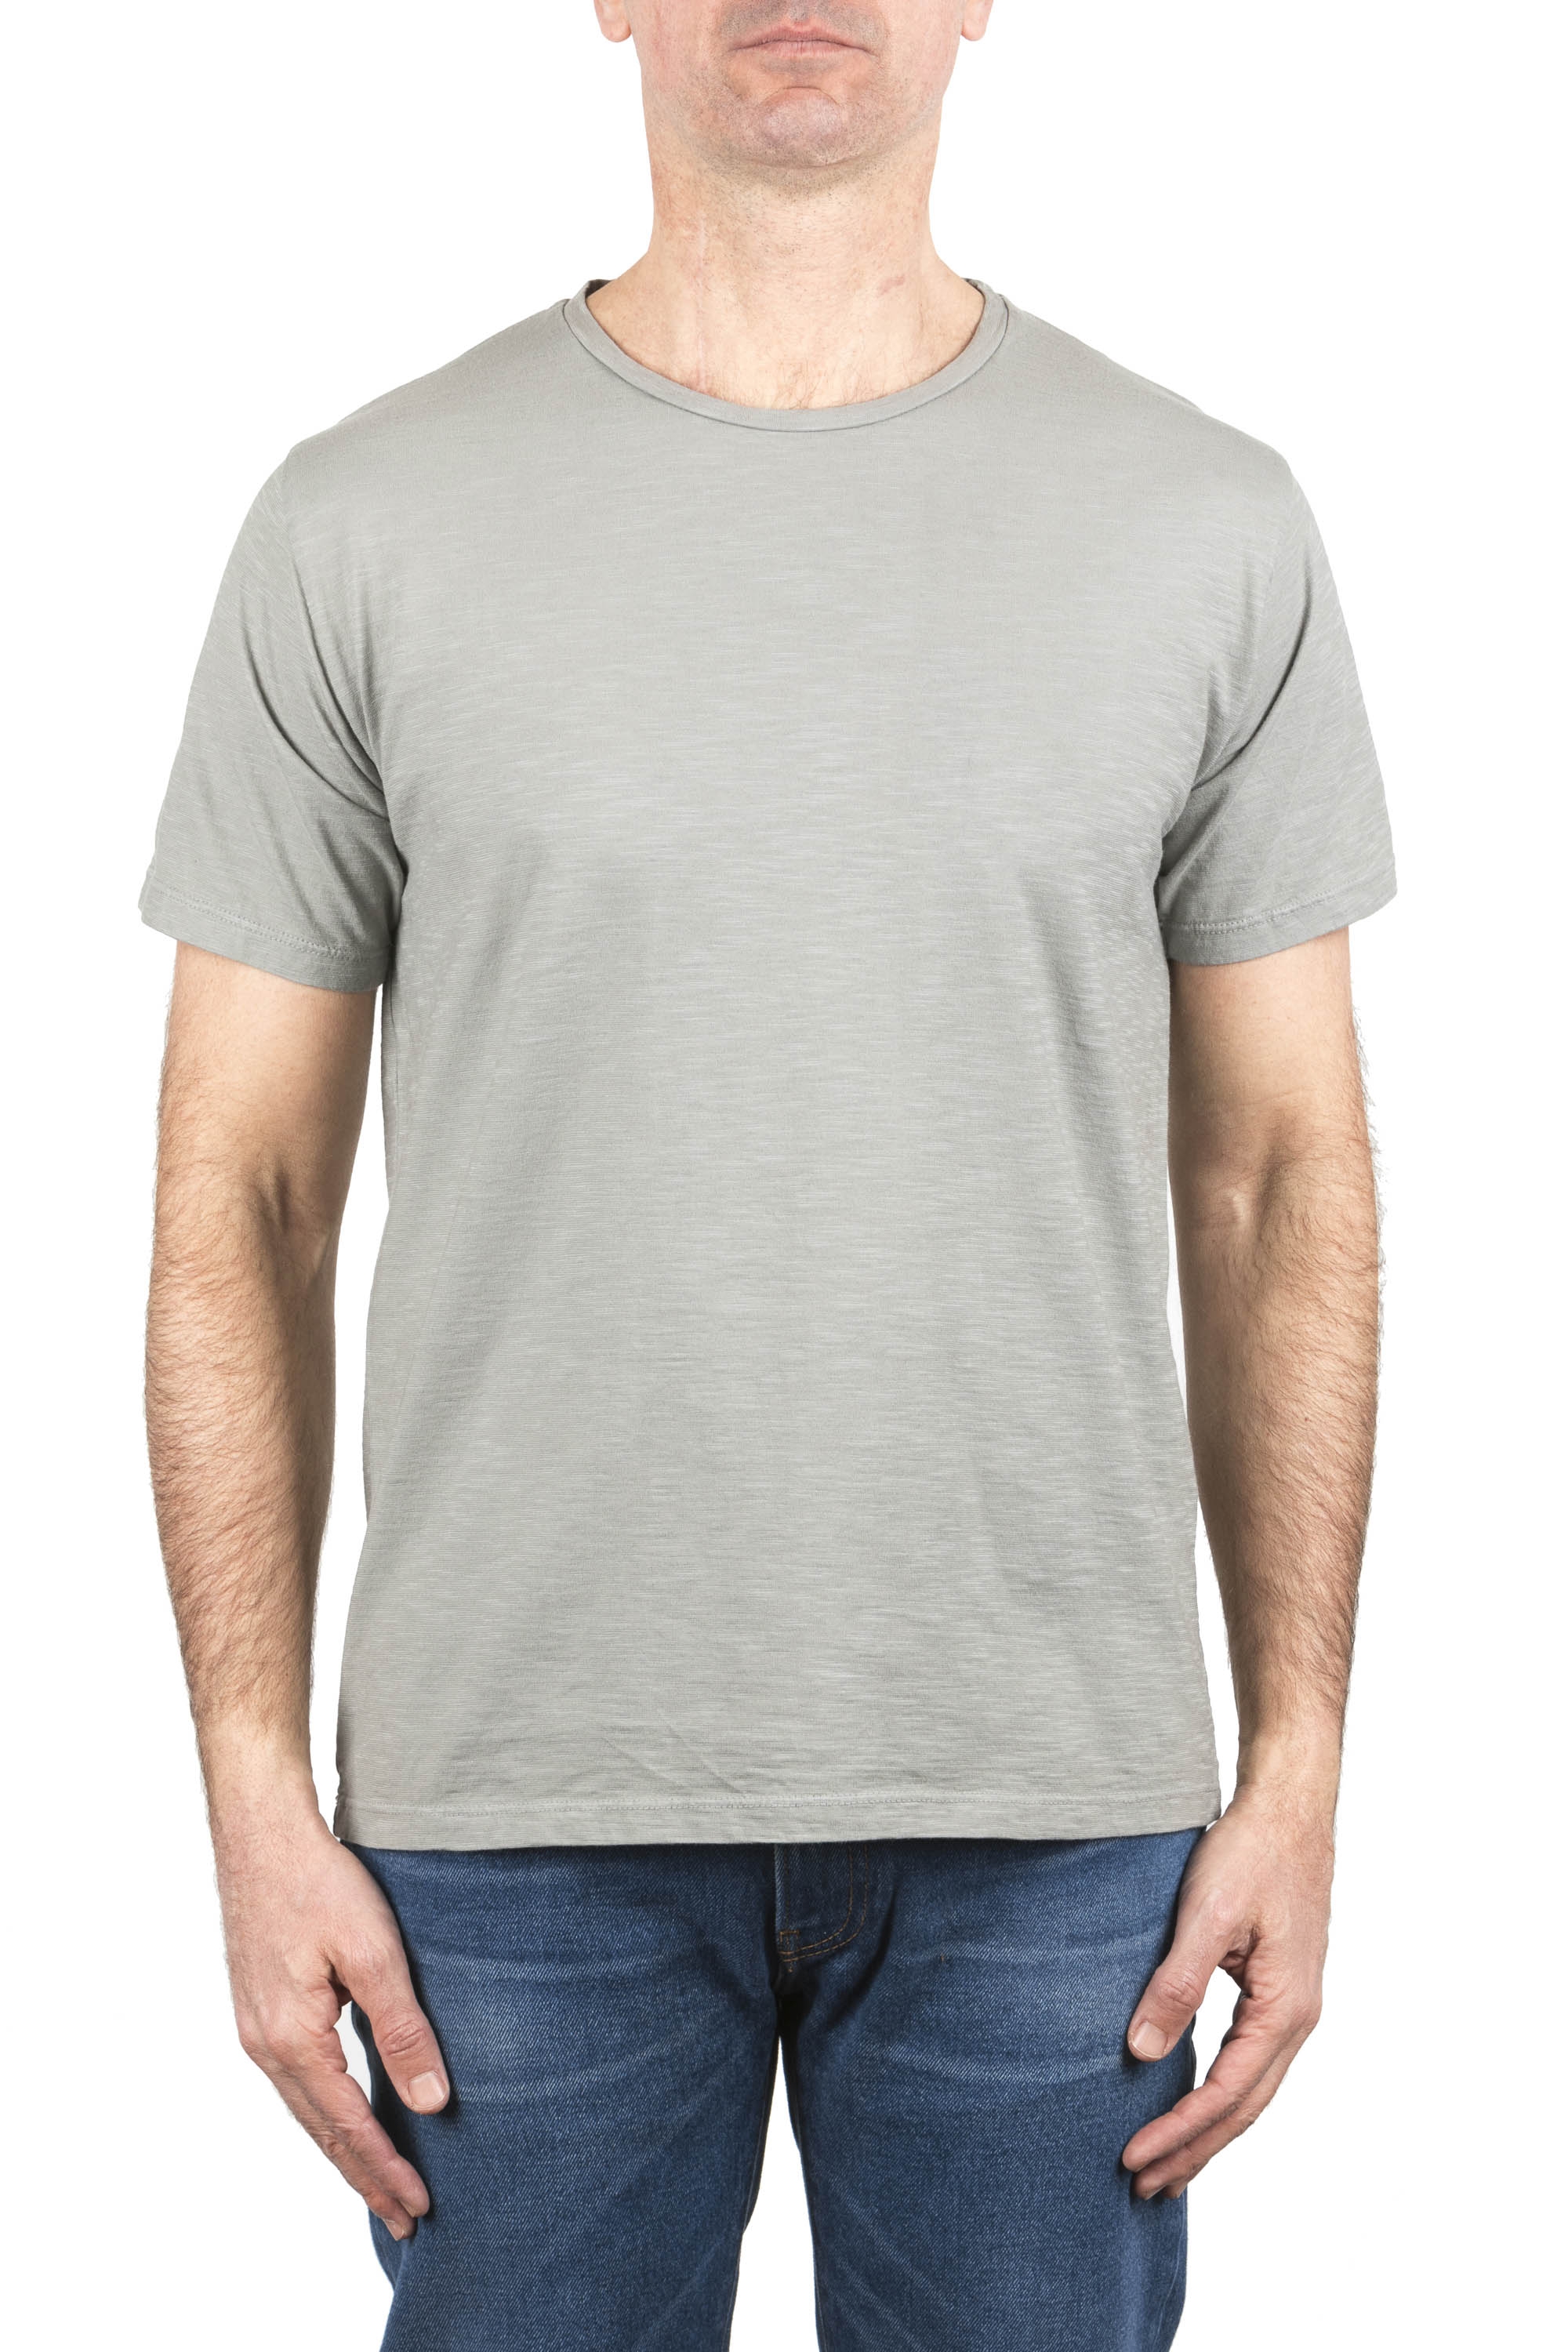 SBU 04170_2023SS Flamed cotton scoop neck t-shirt grey 01